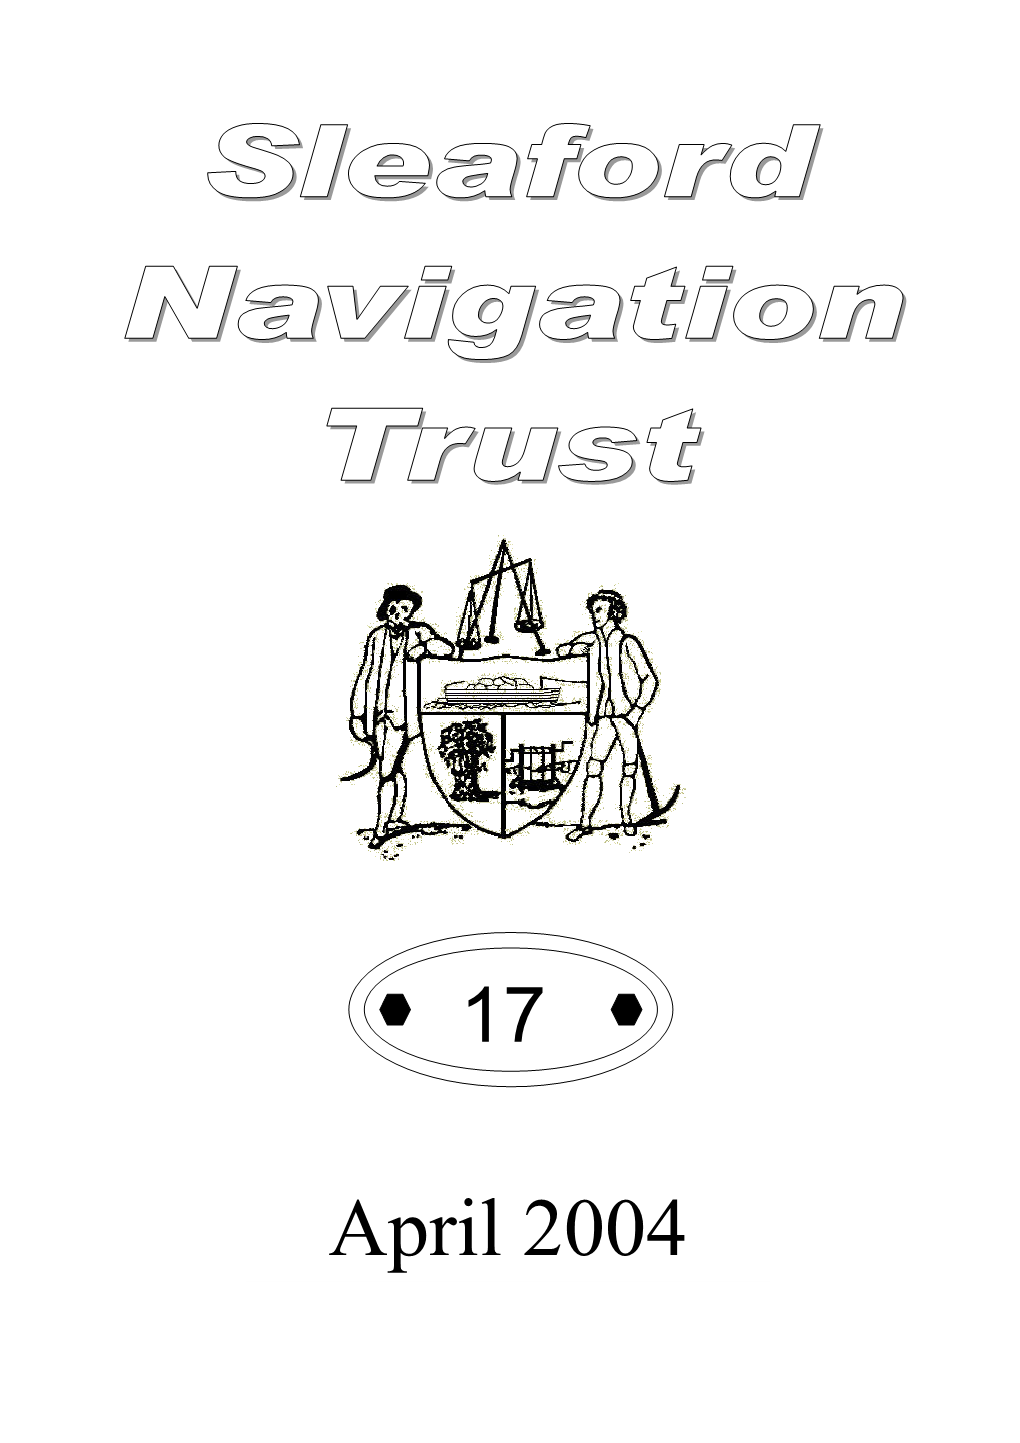 April 2004 the Sleaford Navigation Trust …